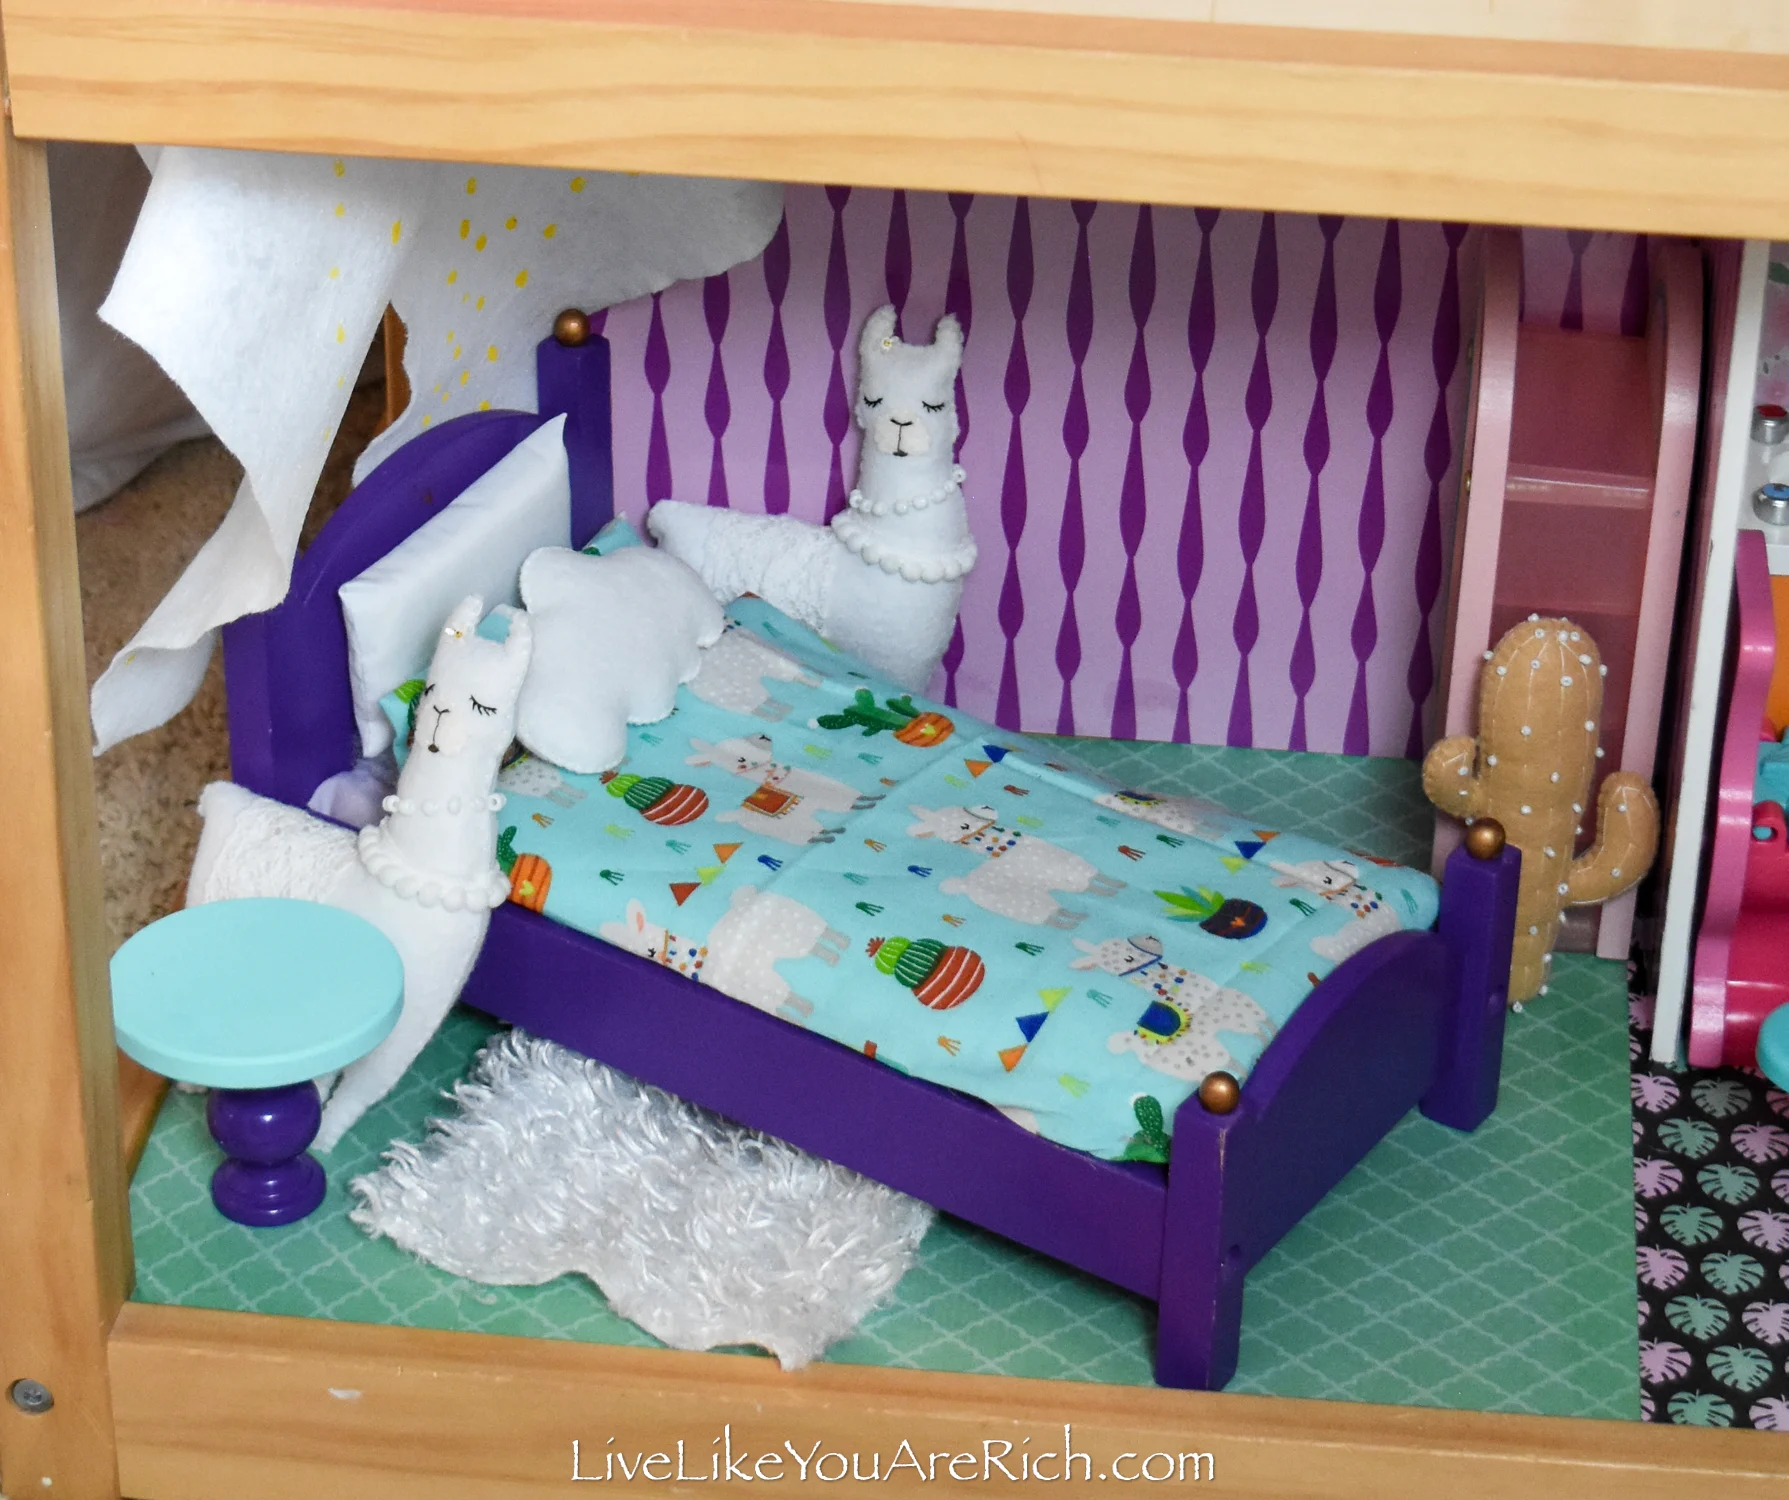 Dollhouse bedroom